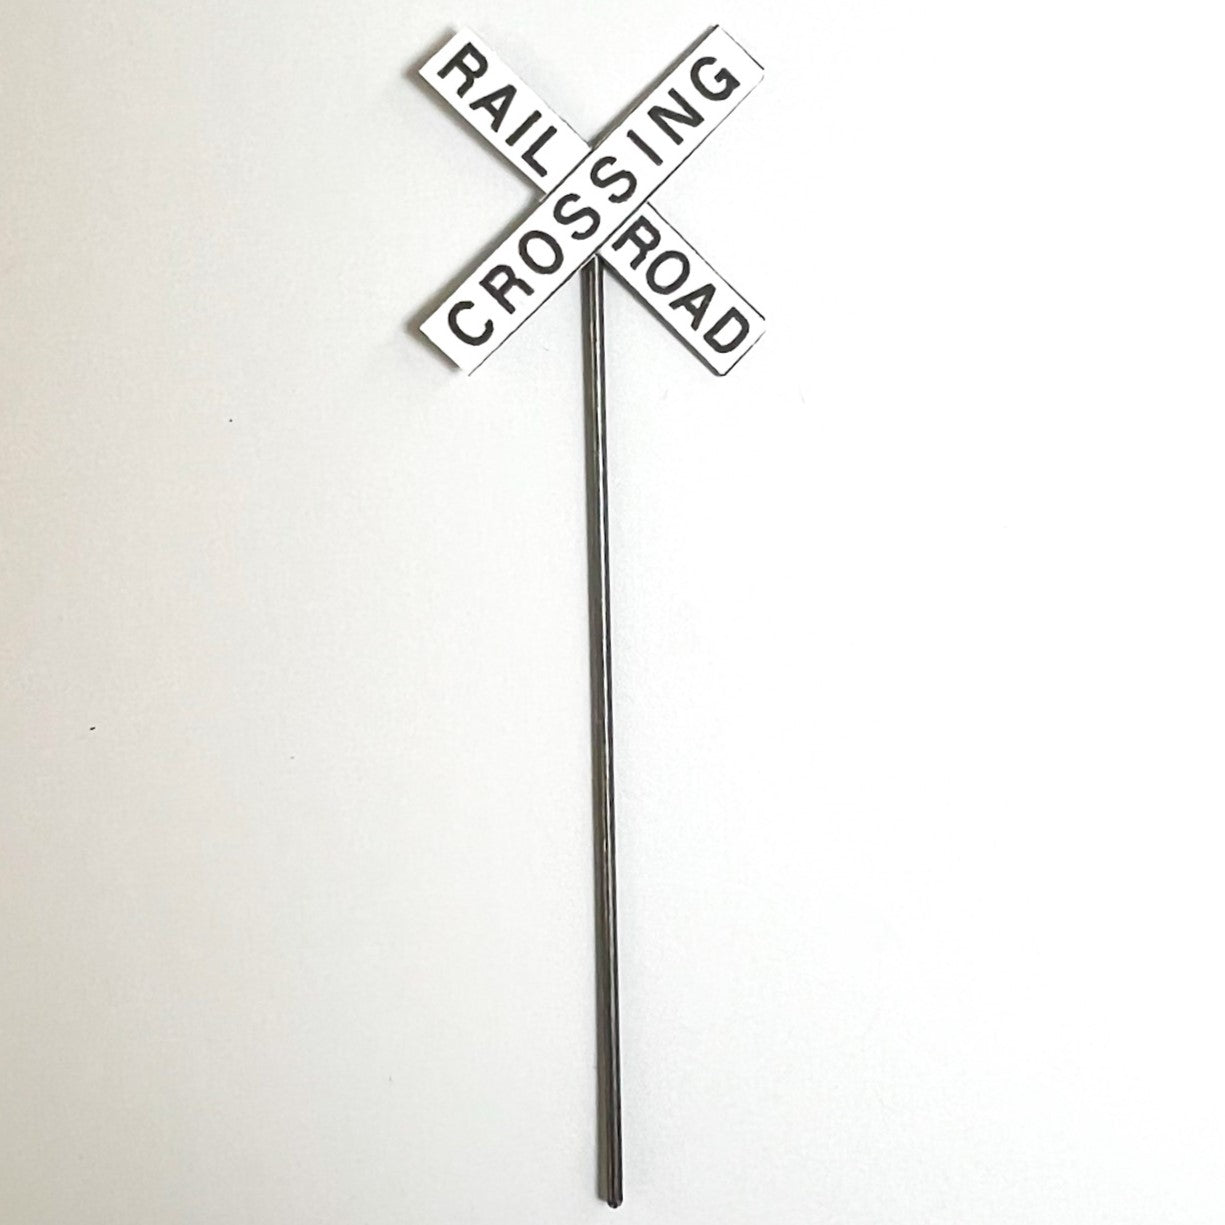 Model Railroad Modern Crossbucks metal pole used for road crossings